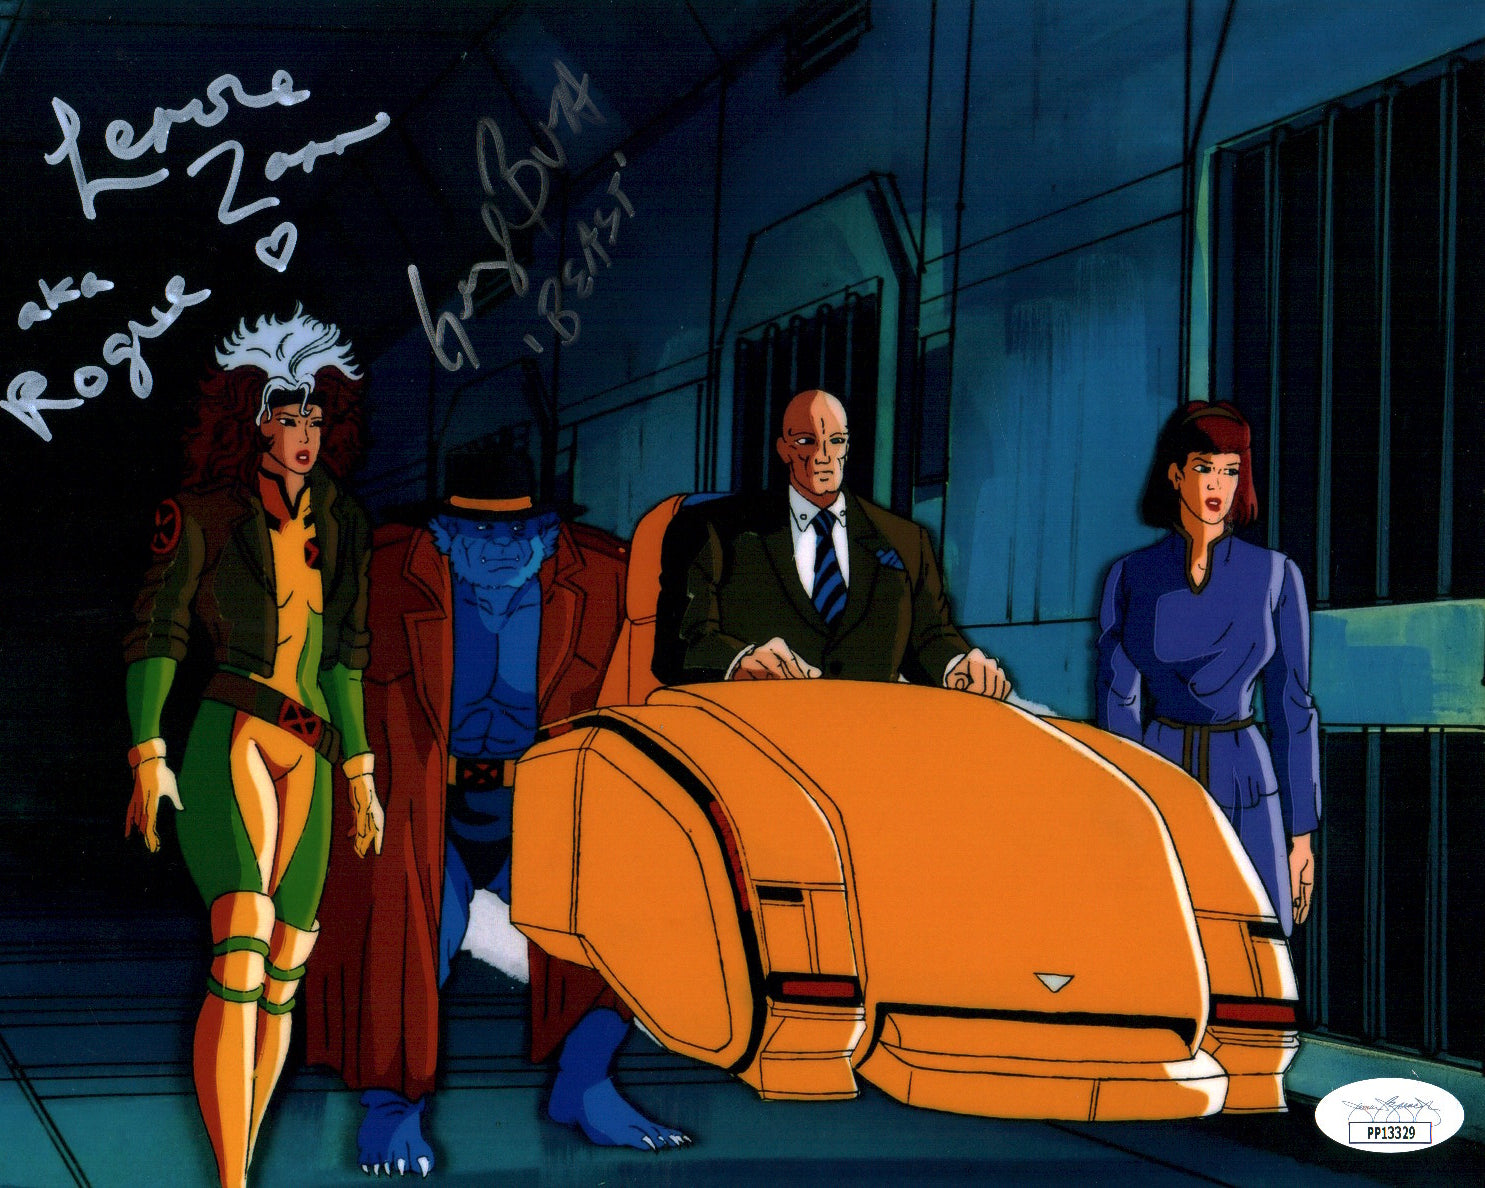 X-Men: The Animated Series 8x10 Photo Cast x2 Signed Buza, Zann JSA Certified Autograph